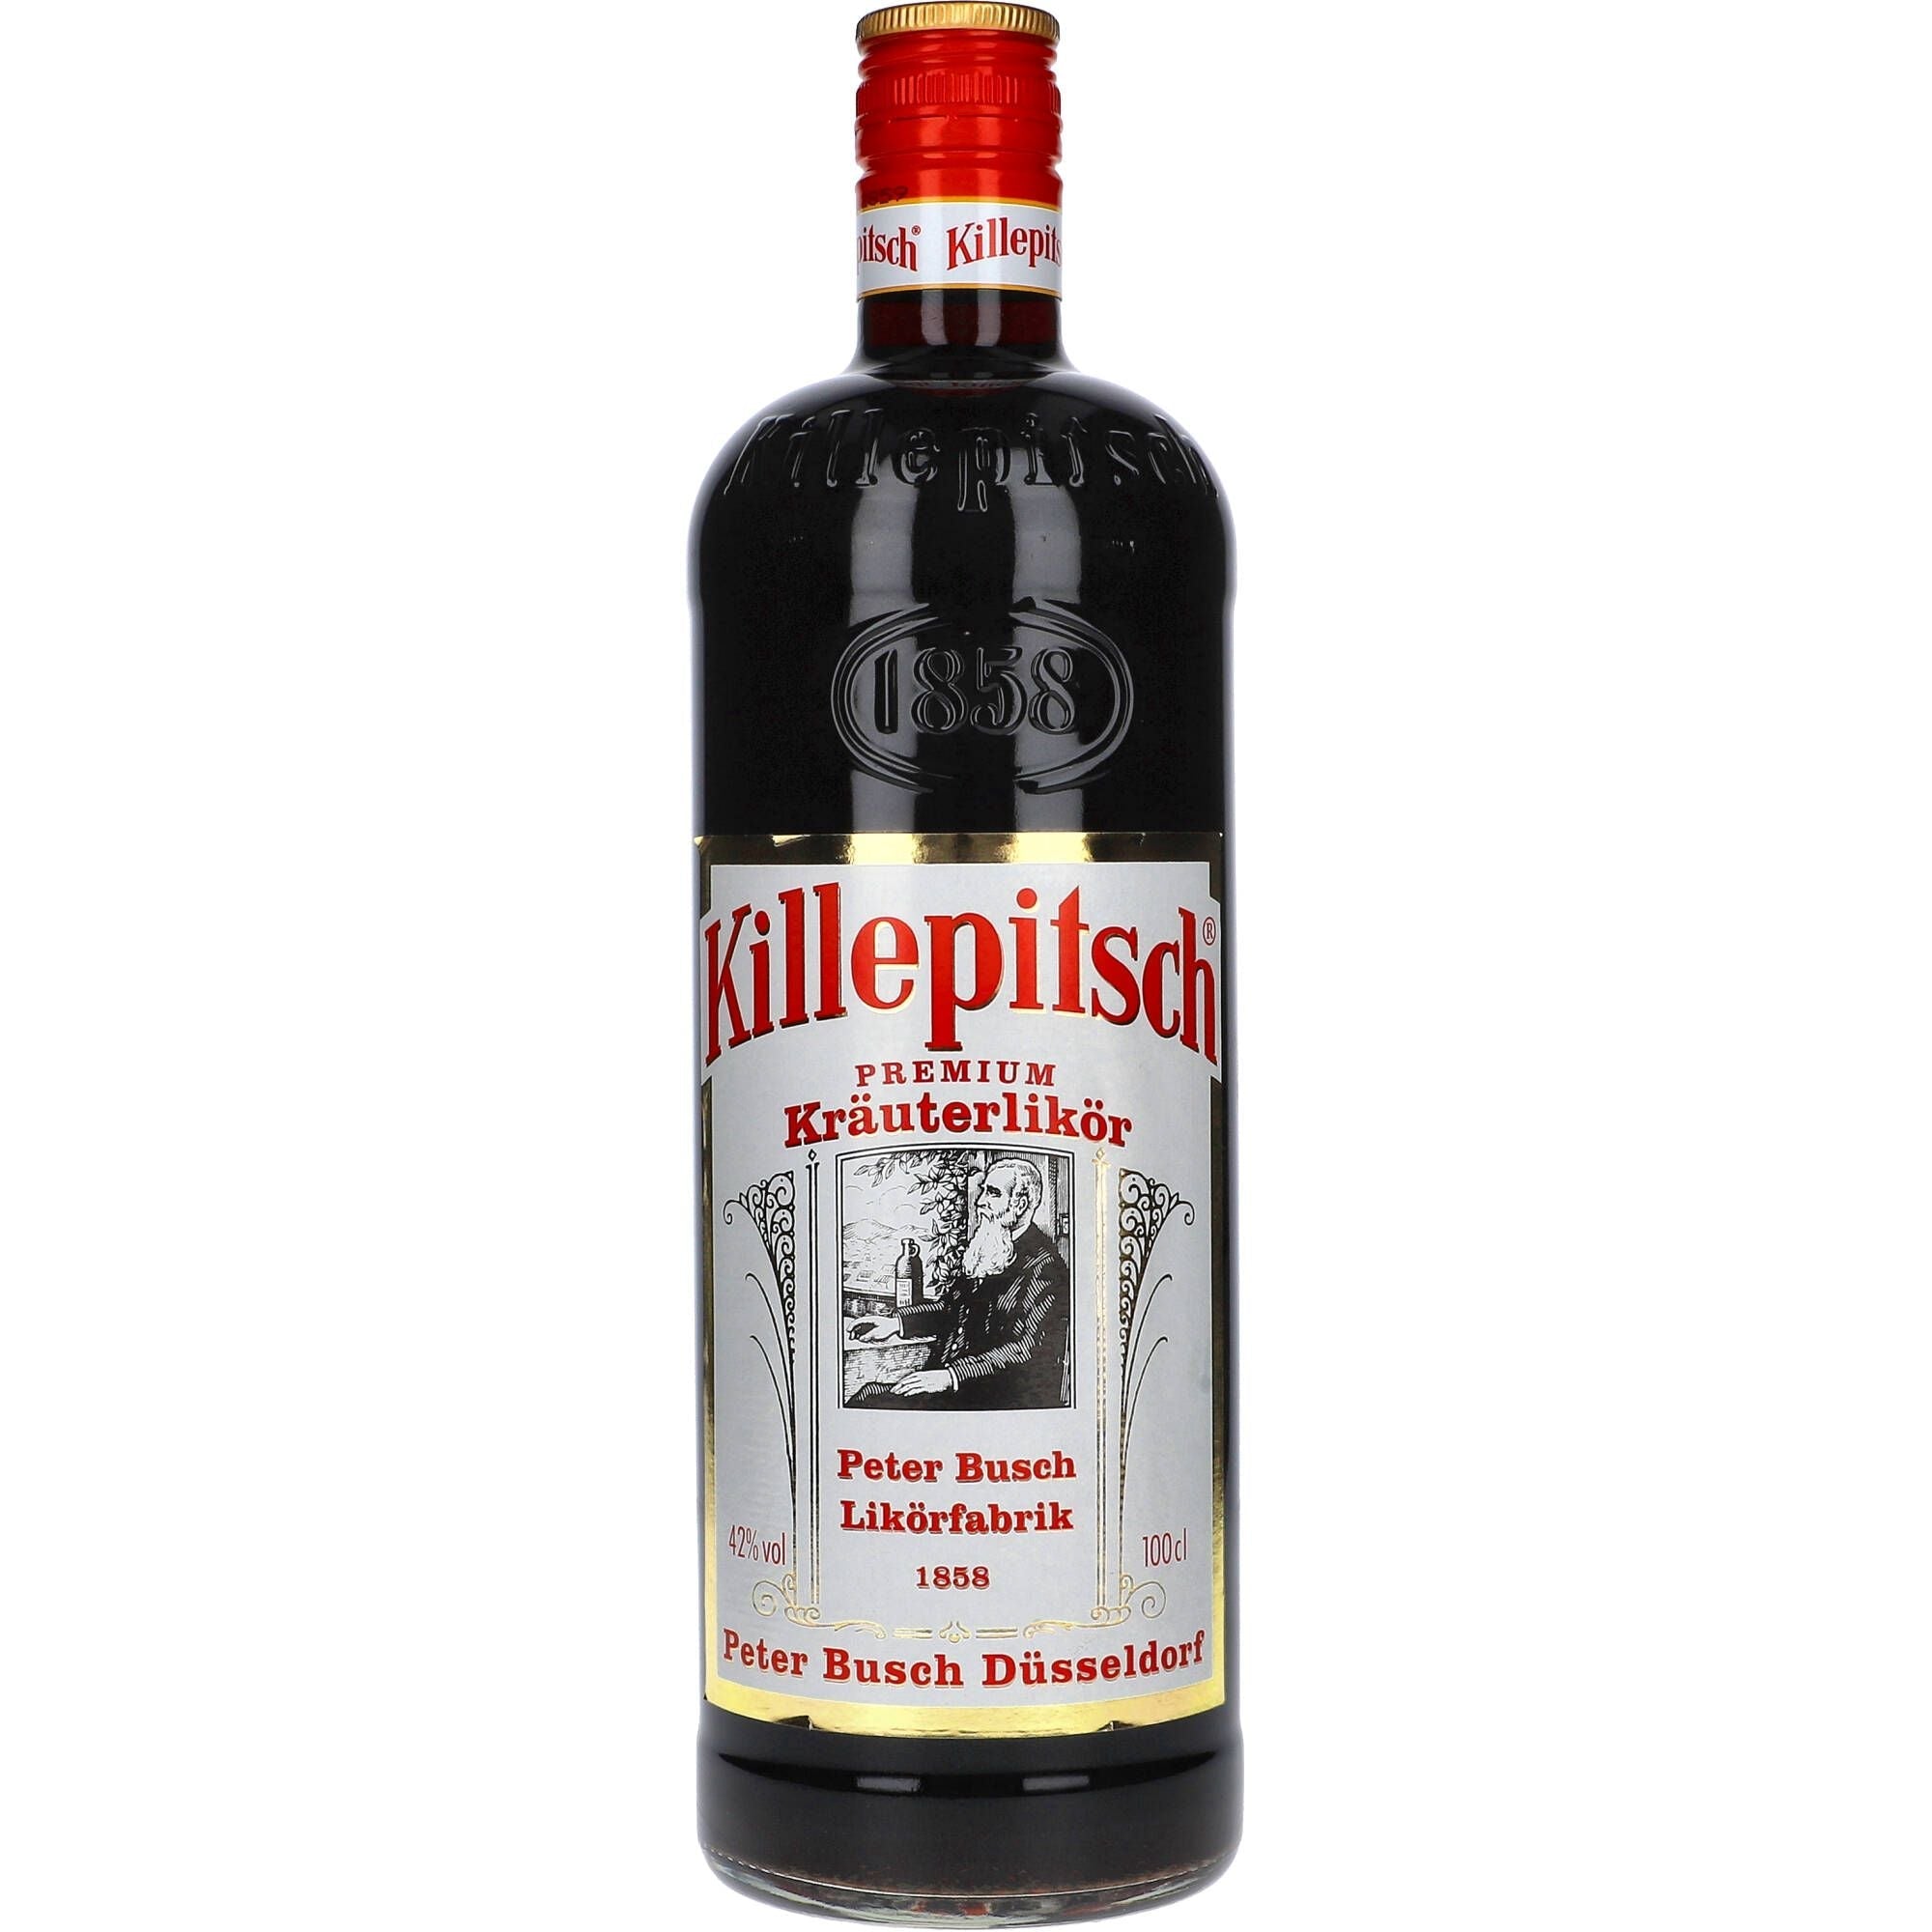 – Killepitsch 42% AllSpirits ltr. 1